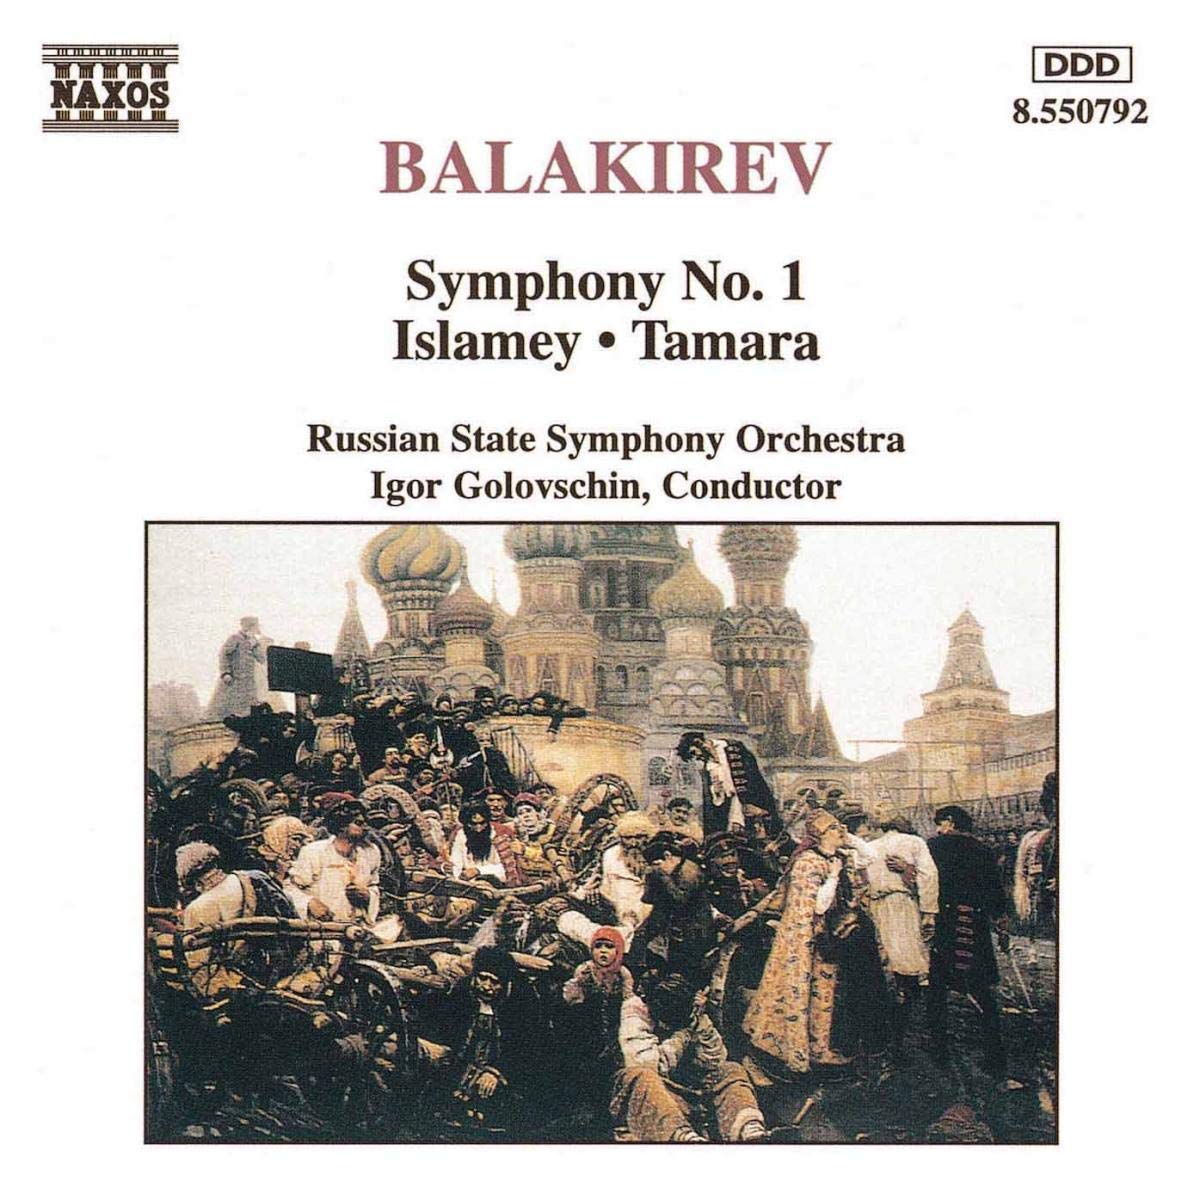 BALAKIREV: Symphony no. 1